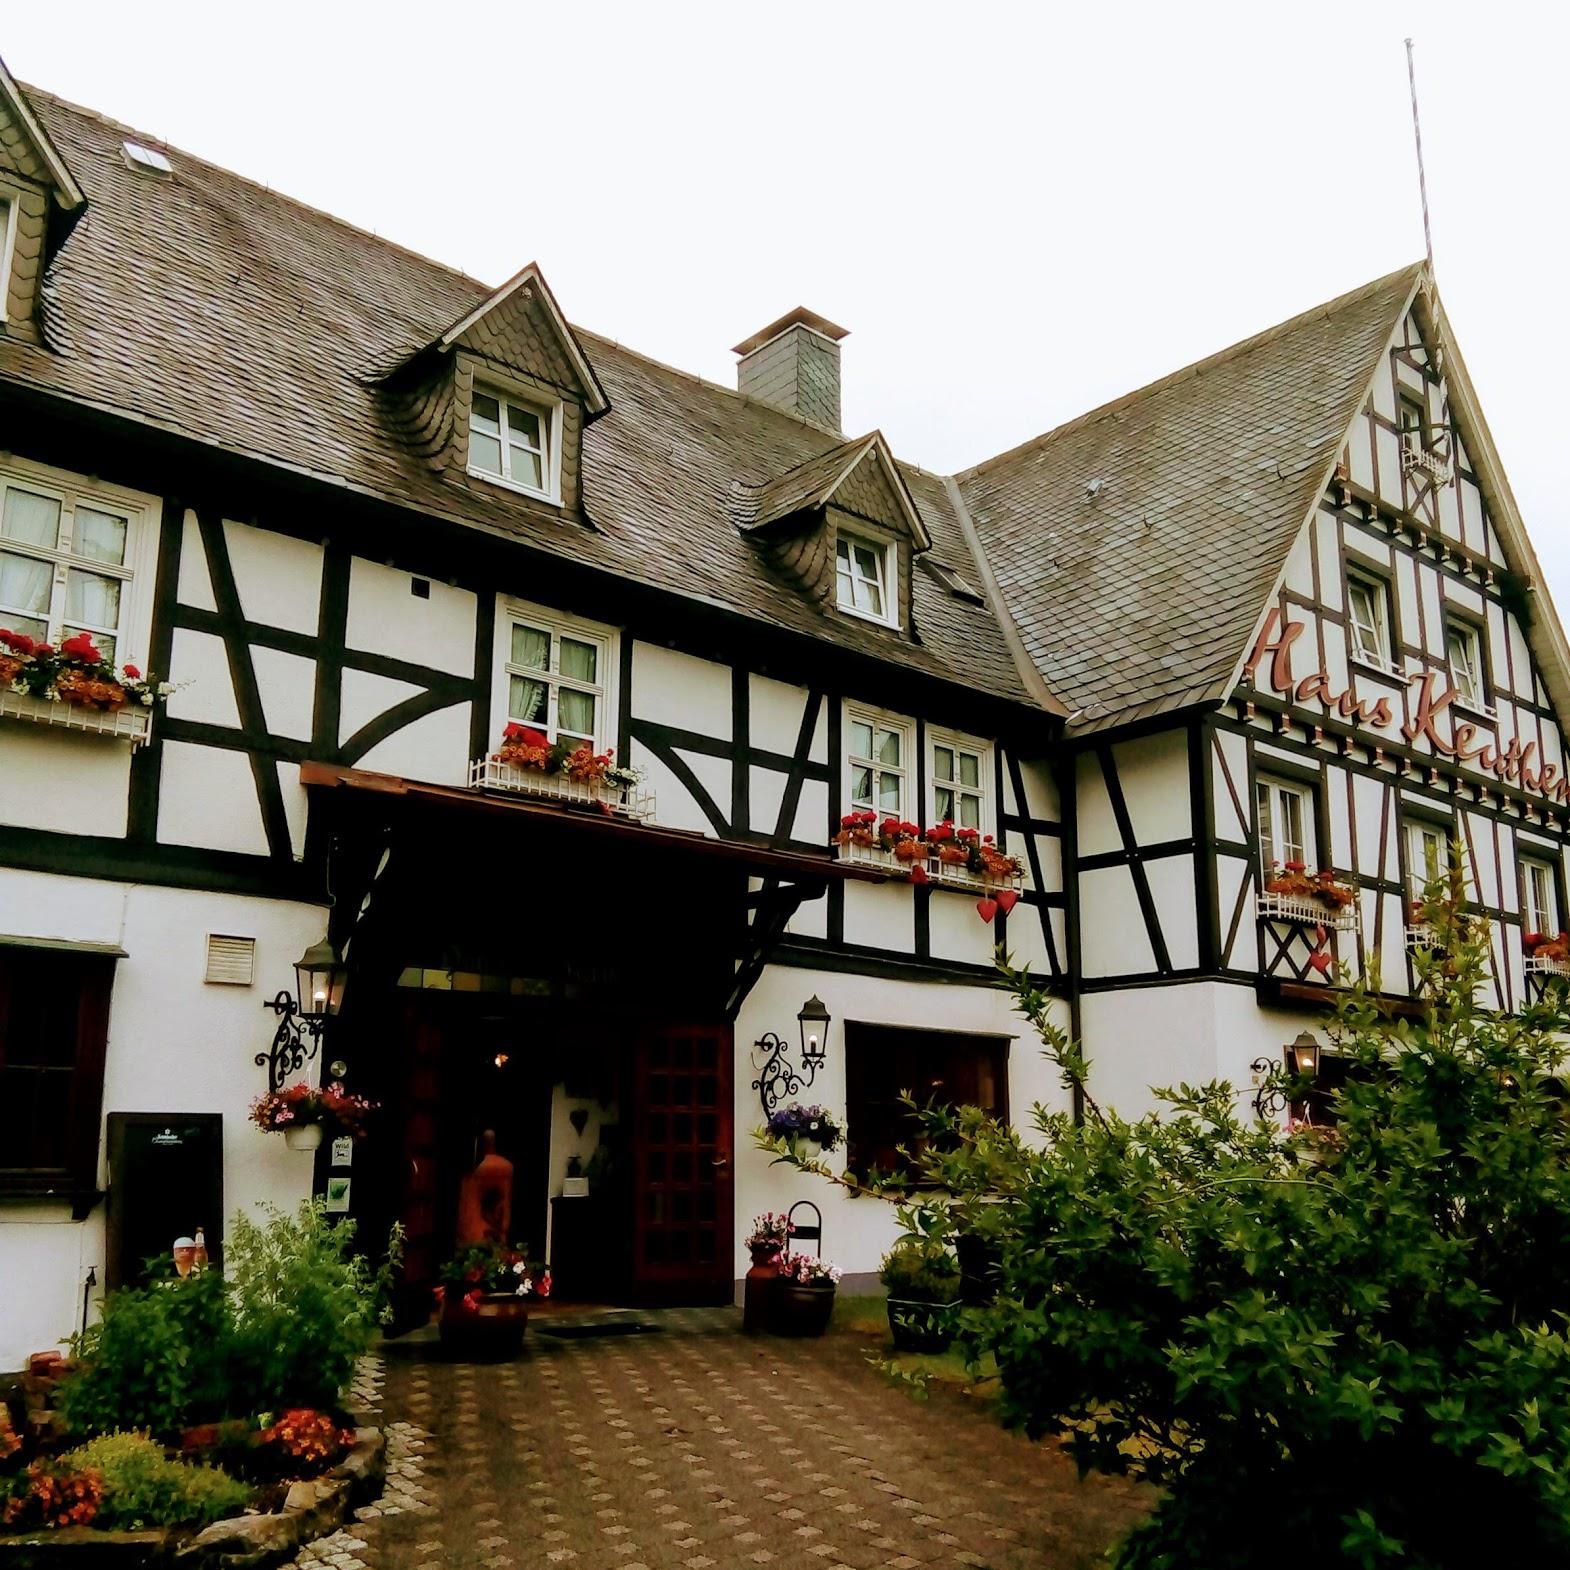 Restaurant "Hotel Haus Keuthen" in Olsberg